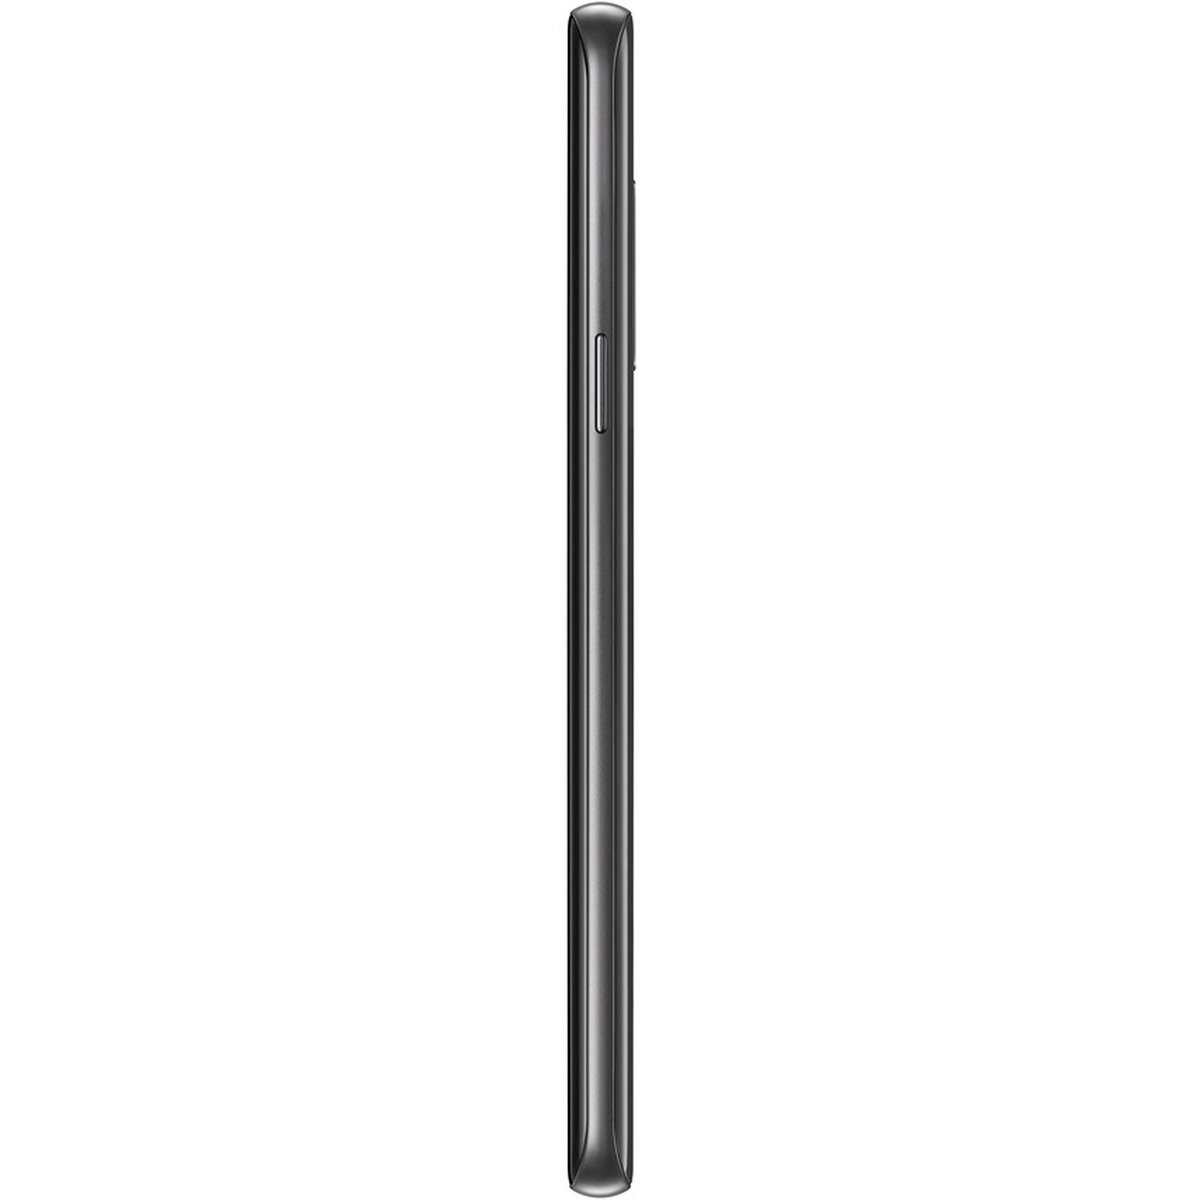 Samsung Galaxy S9 SM-G960FZPDXSG 64 GB Titanium Gray